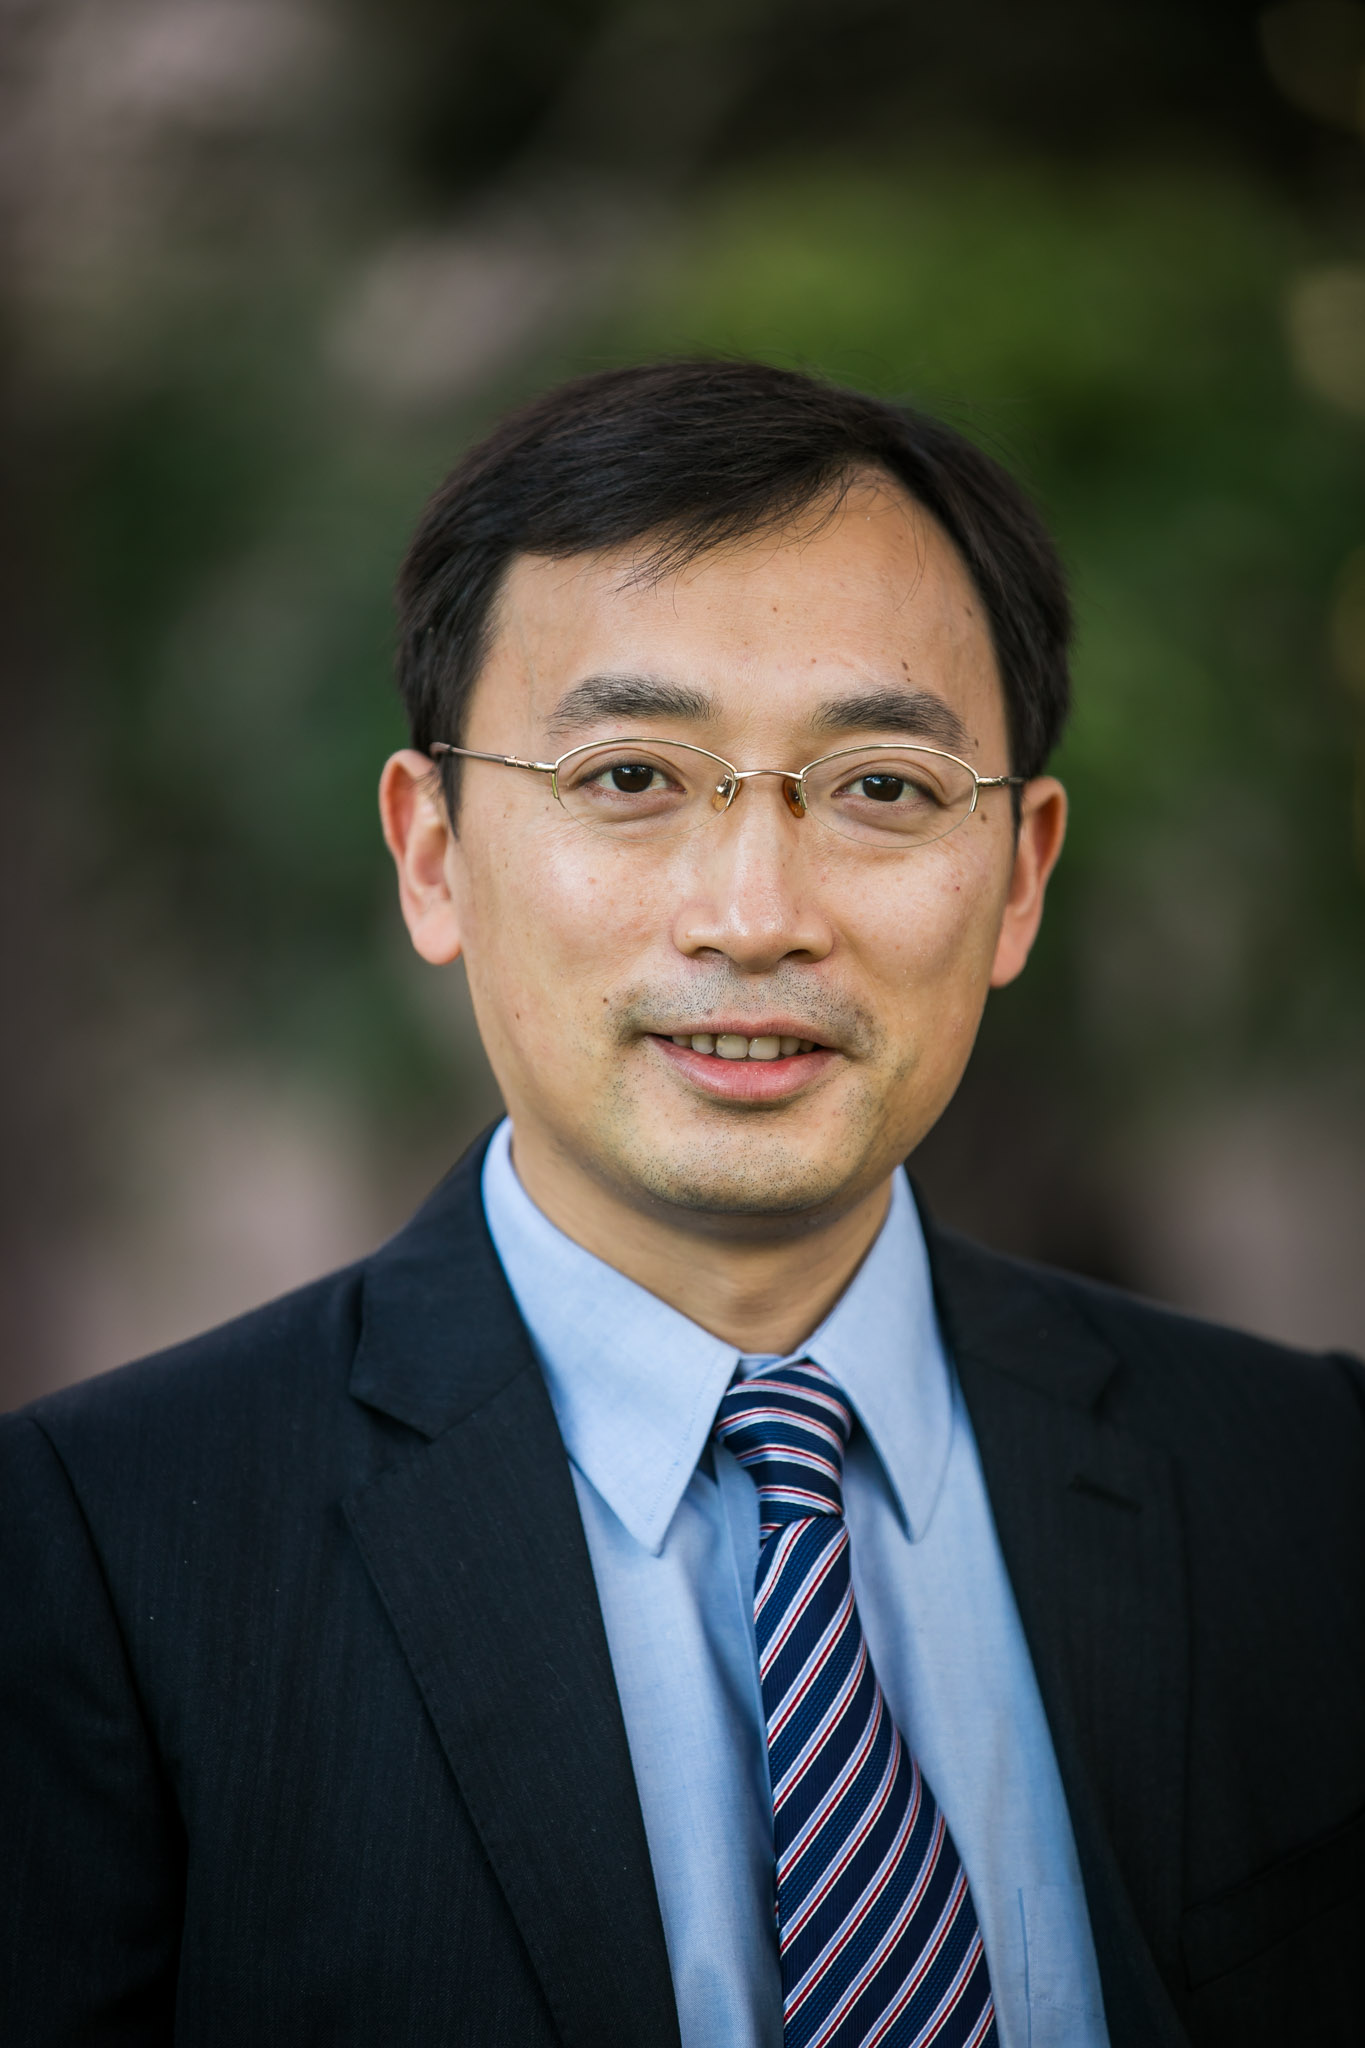 A headshot photo of Professor Heng Wang 